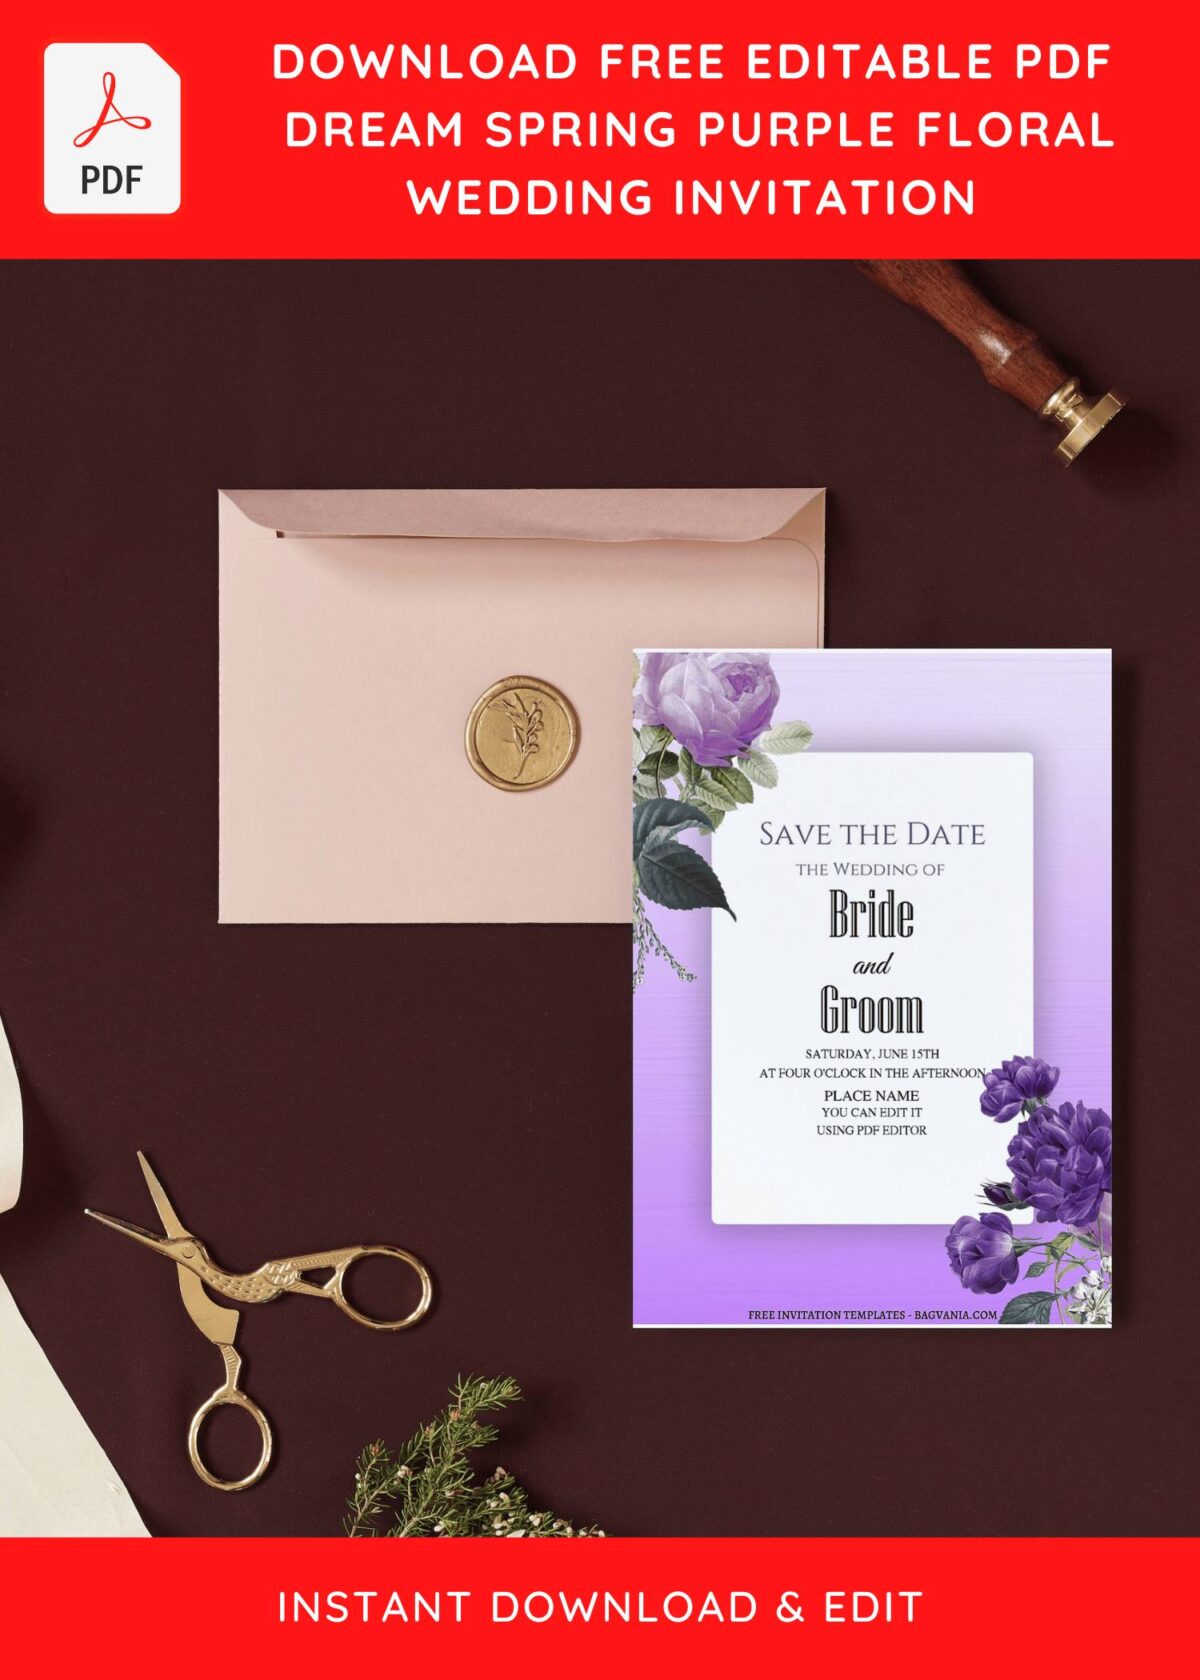 (Free Editable PDF) Dreamy Purple Flowers Wedding Invitation Templates with hand drawn rose